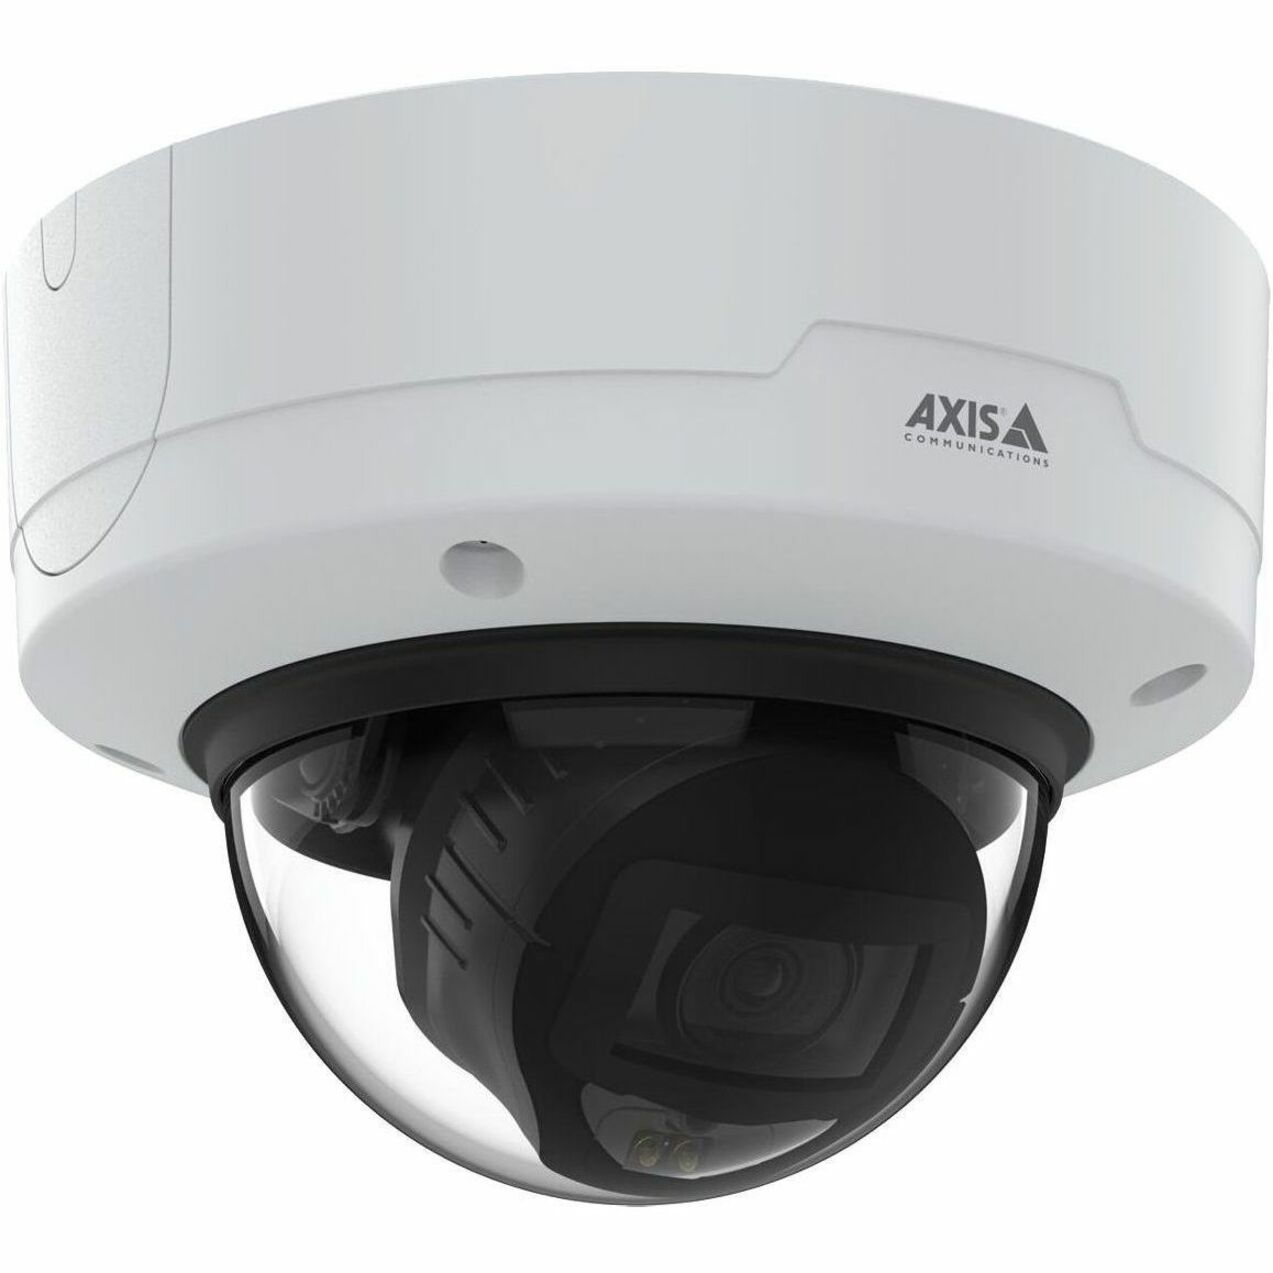 AXIS P3267-LV 5 Megapixel Indoor Network Camera - Color - Dome - TAA Compliant (02329-001)